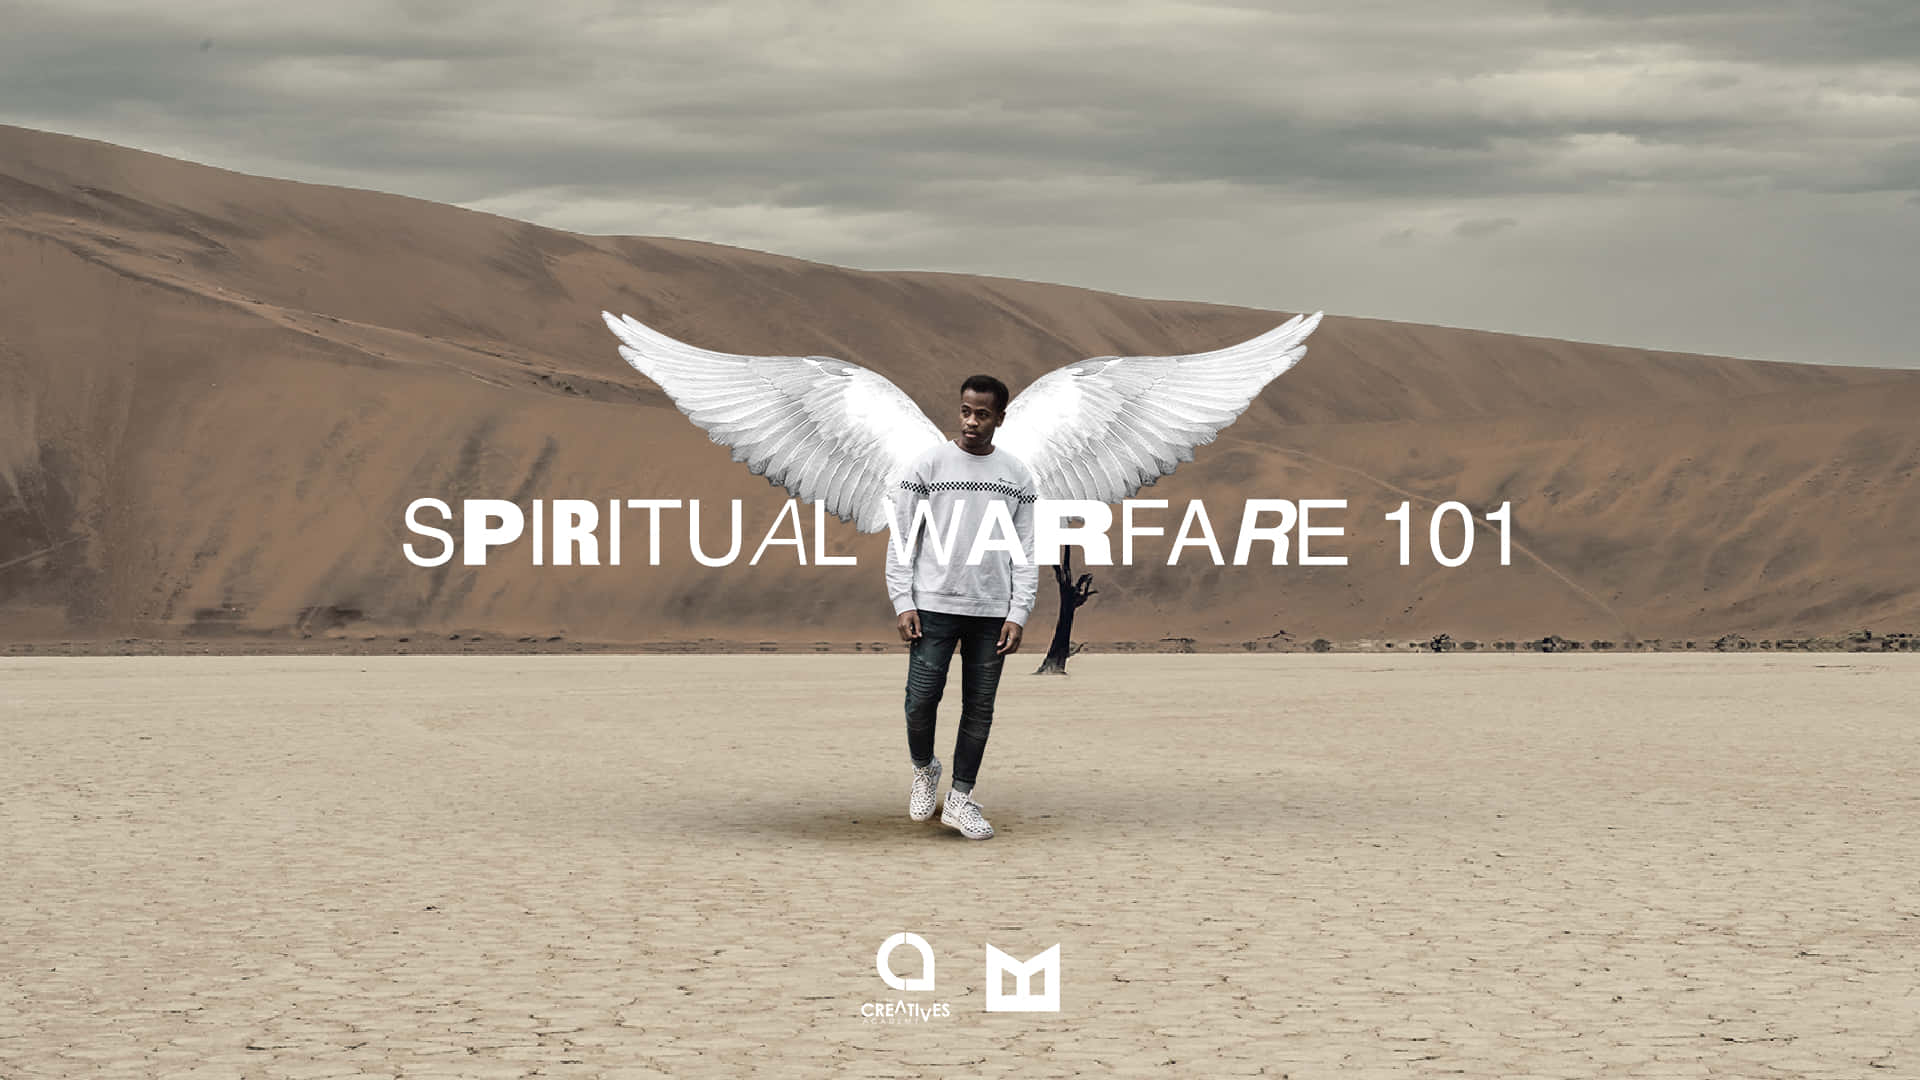 Stand Firm in Spiritual Warfare Wallpaper